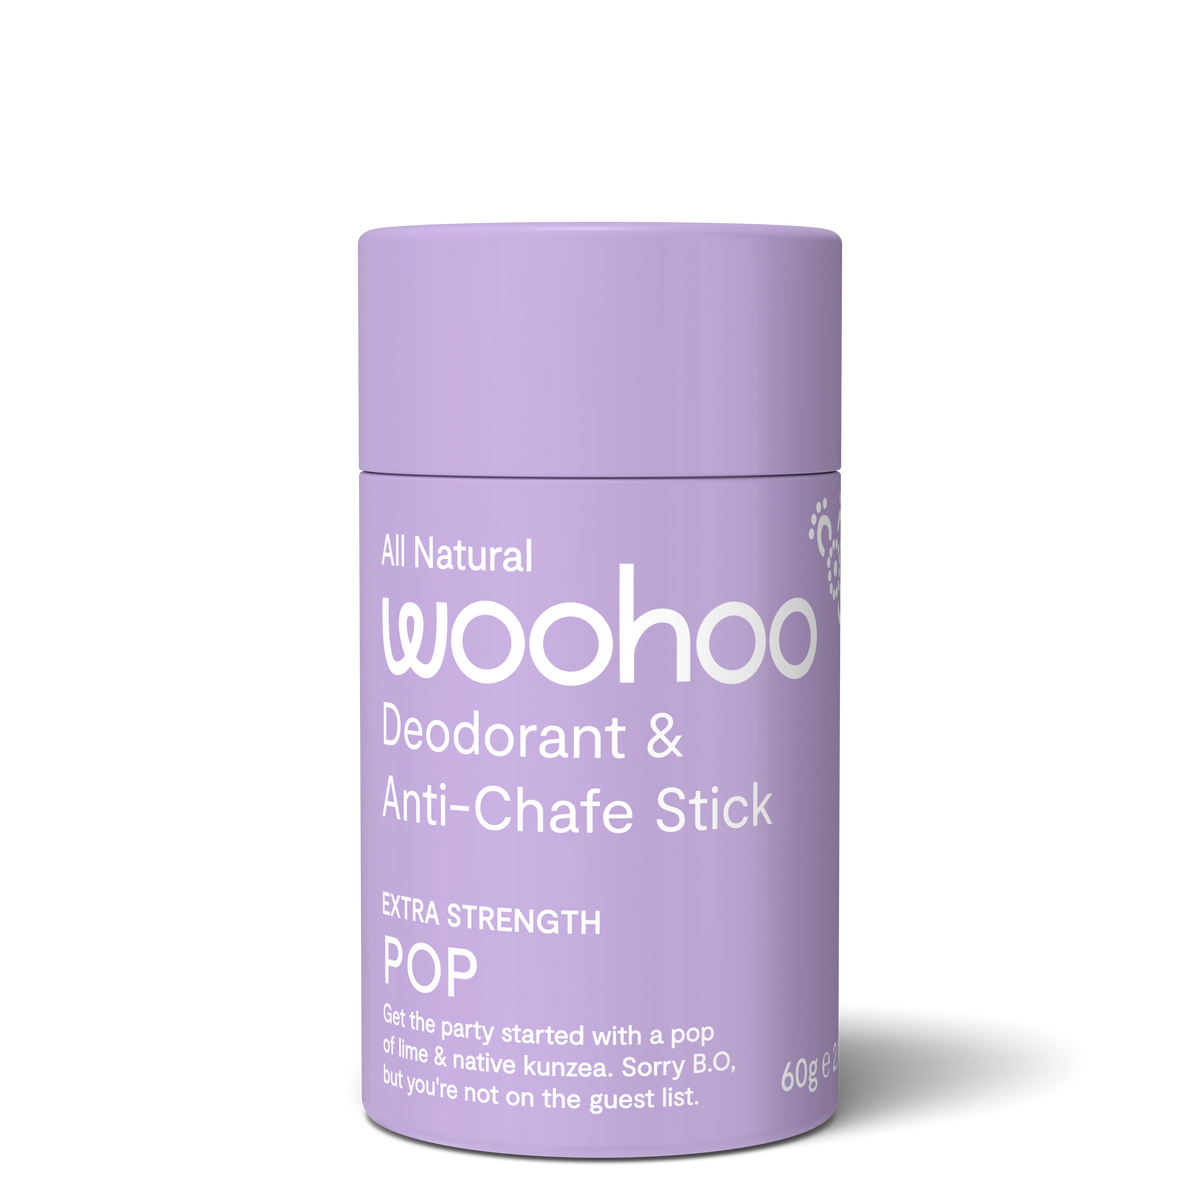 Woohoo Natural Deodorant &amp; Anti-Chafe Stick (Pop) 60g